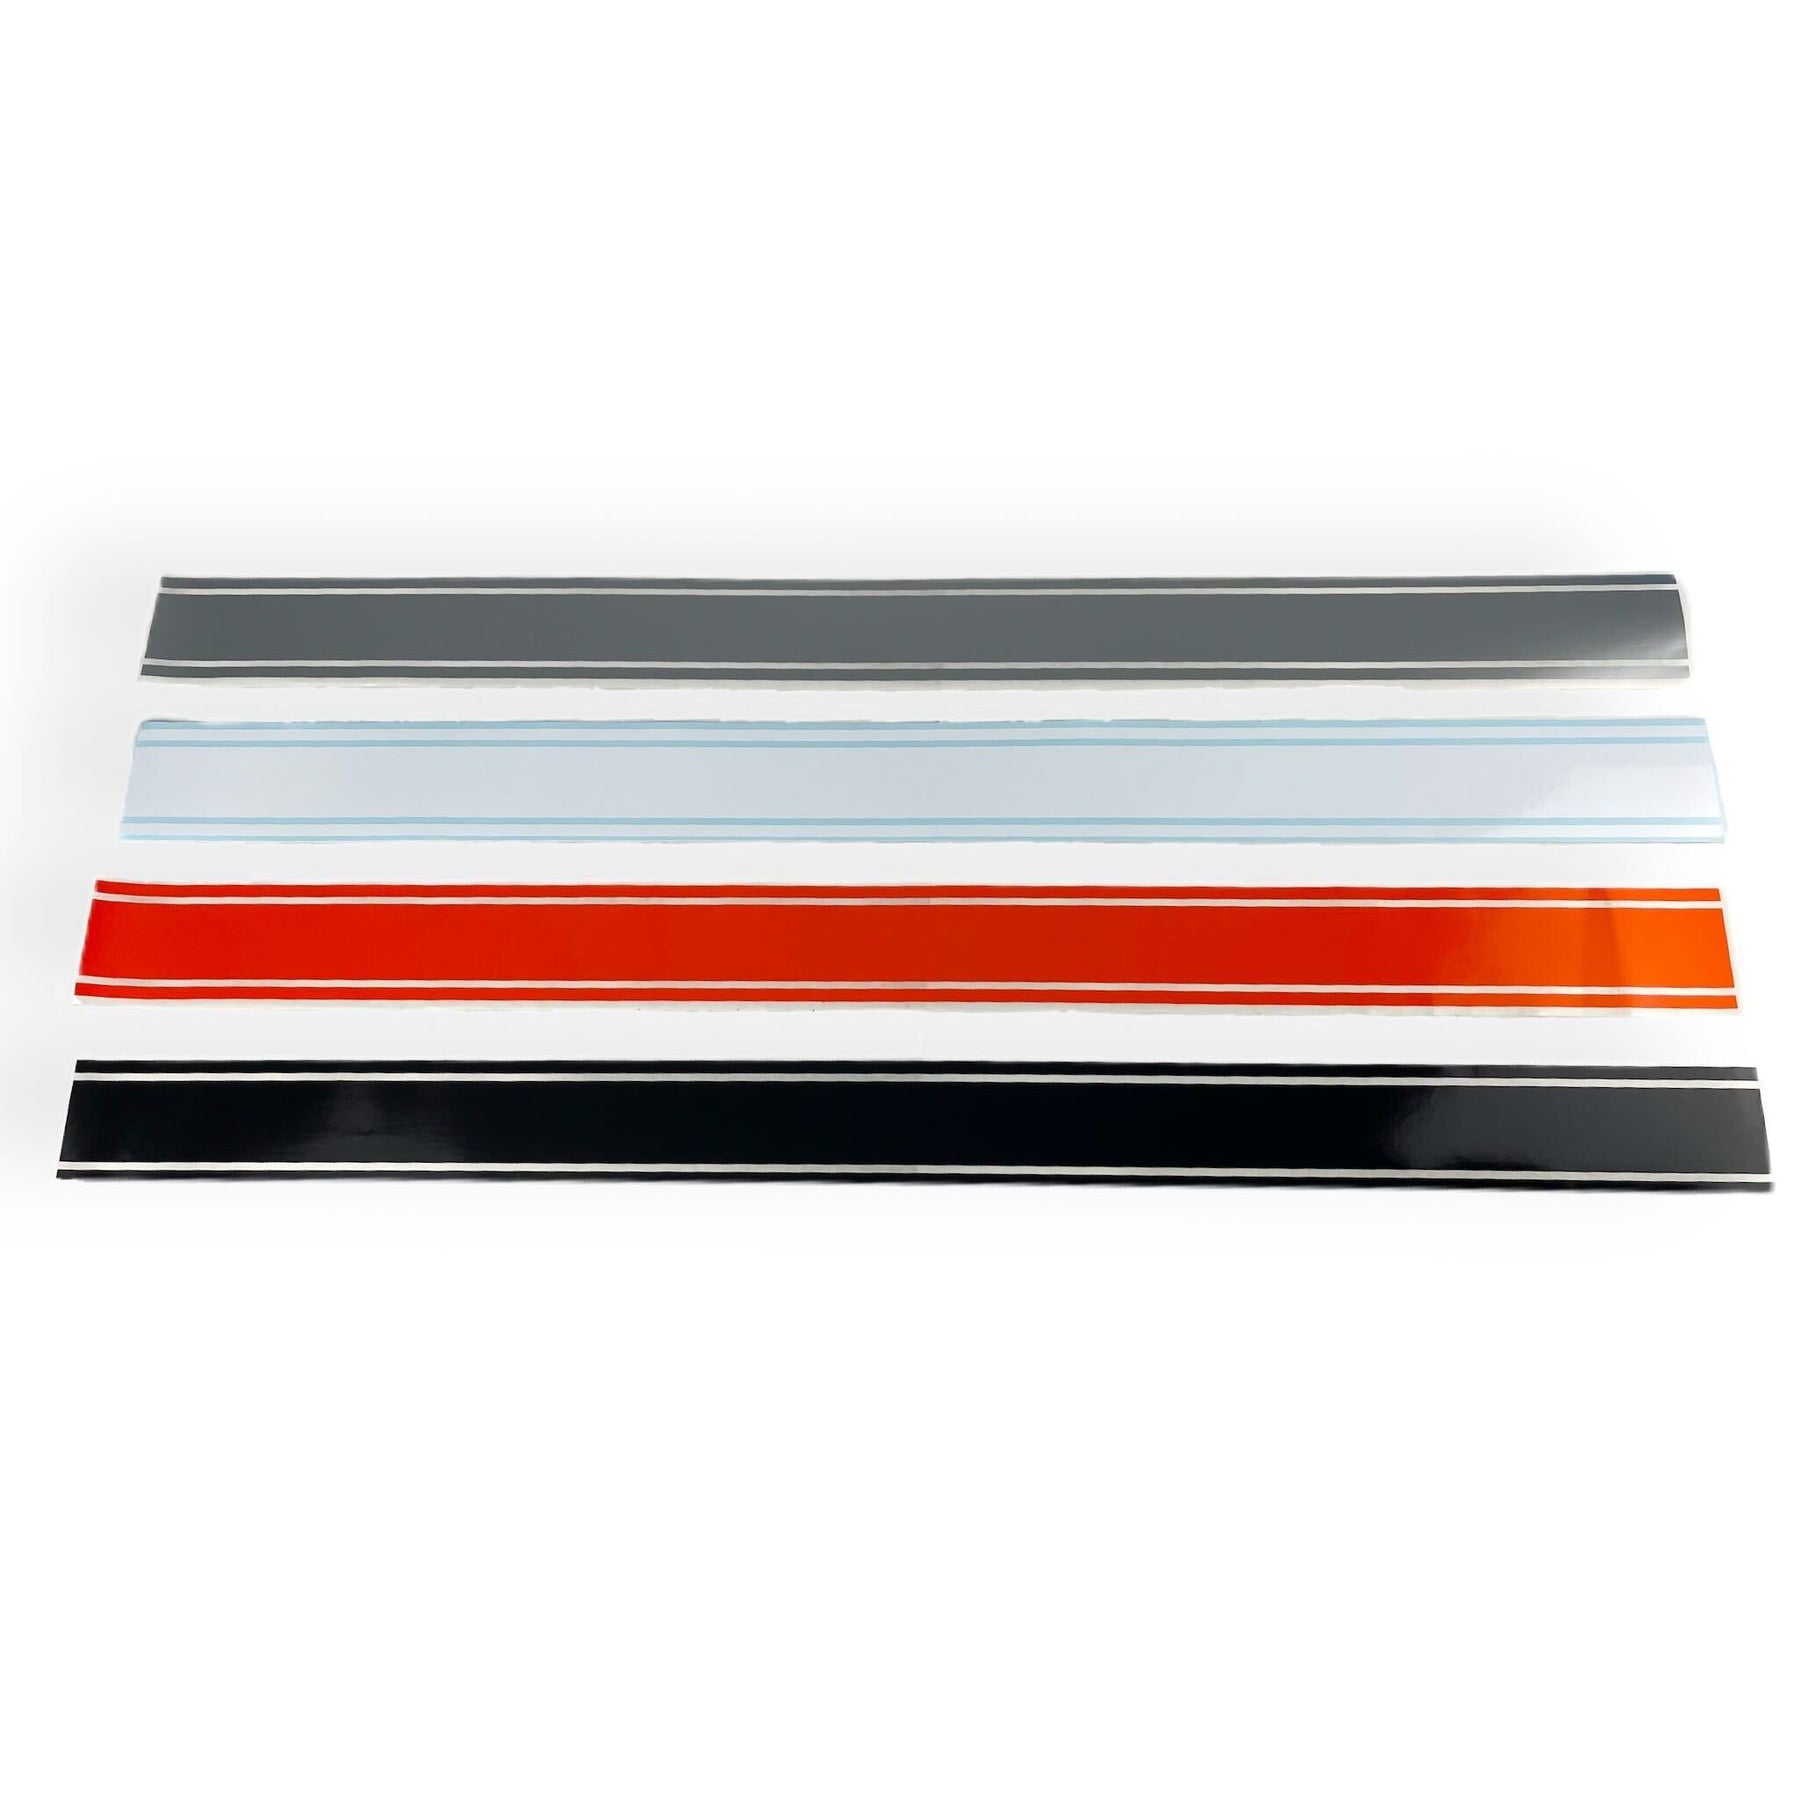 Scomadi GP Side Panel Stripes - Black